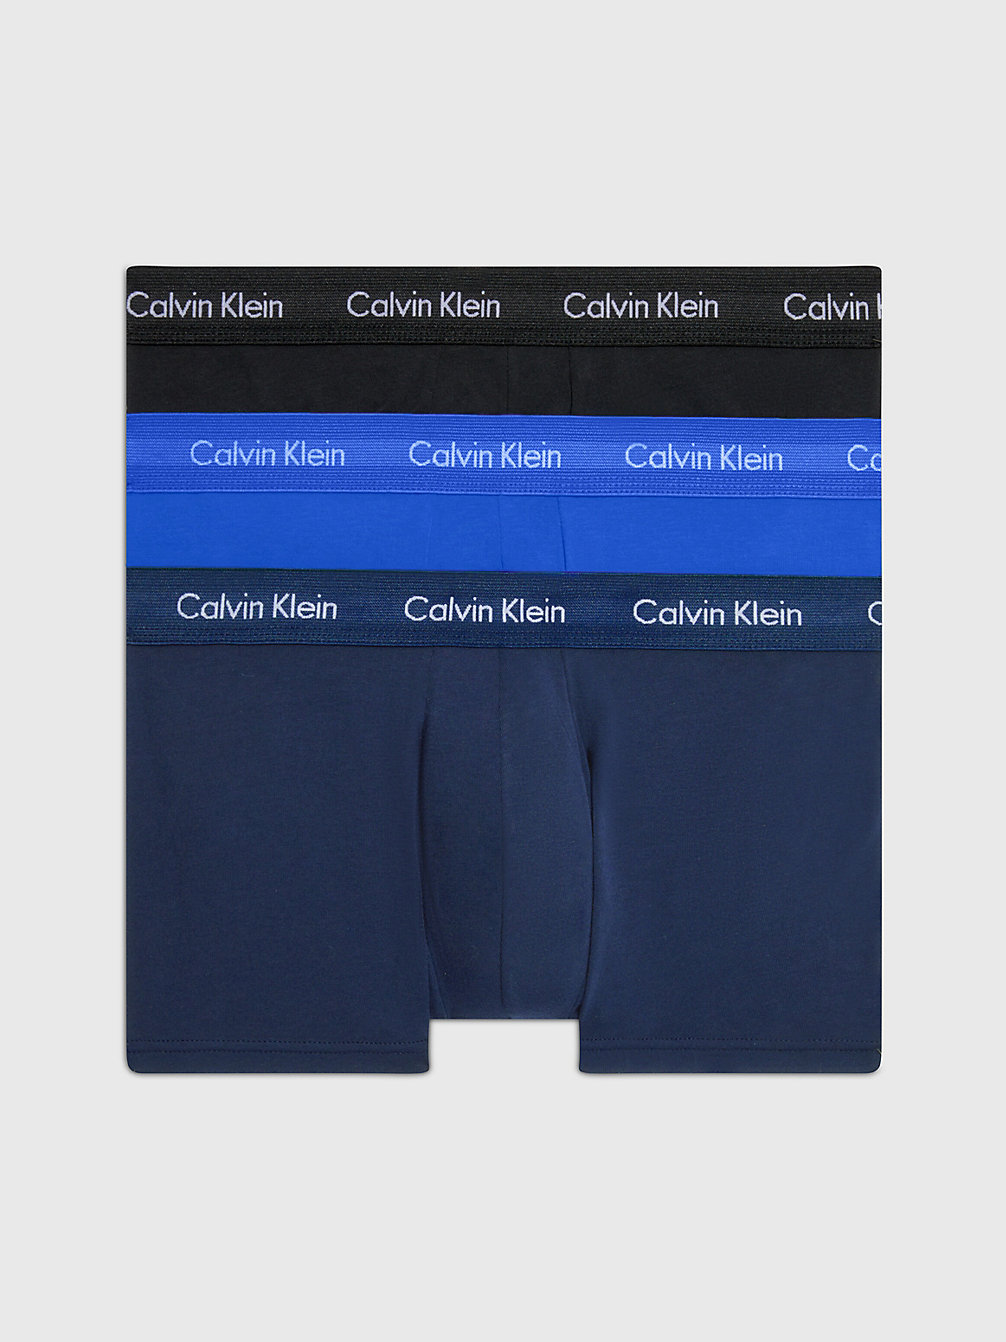 BLACK/BLUESHADOW/COBALTWATER DTM WB > Комплект боксеров низкой посадки 3 шт. - Cotton Stretch > undefined женщины - Calvin Klein